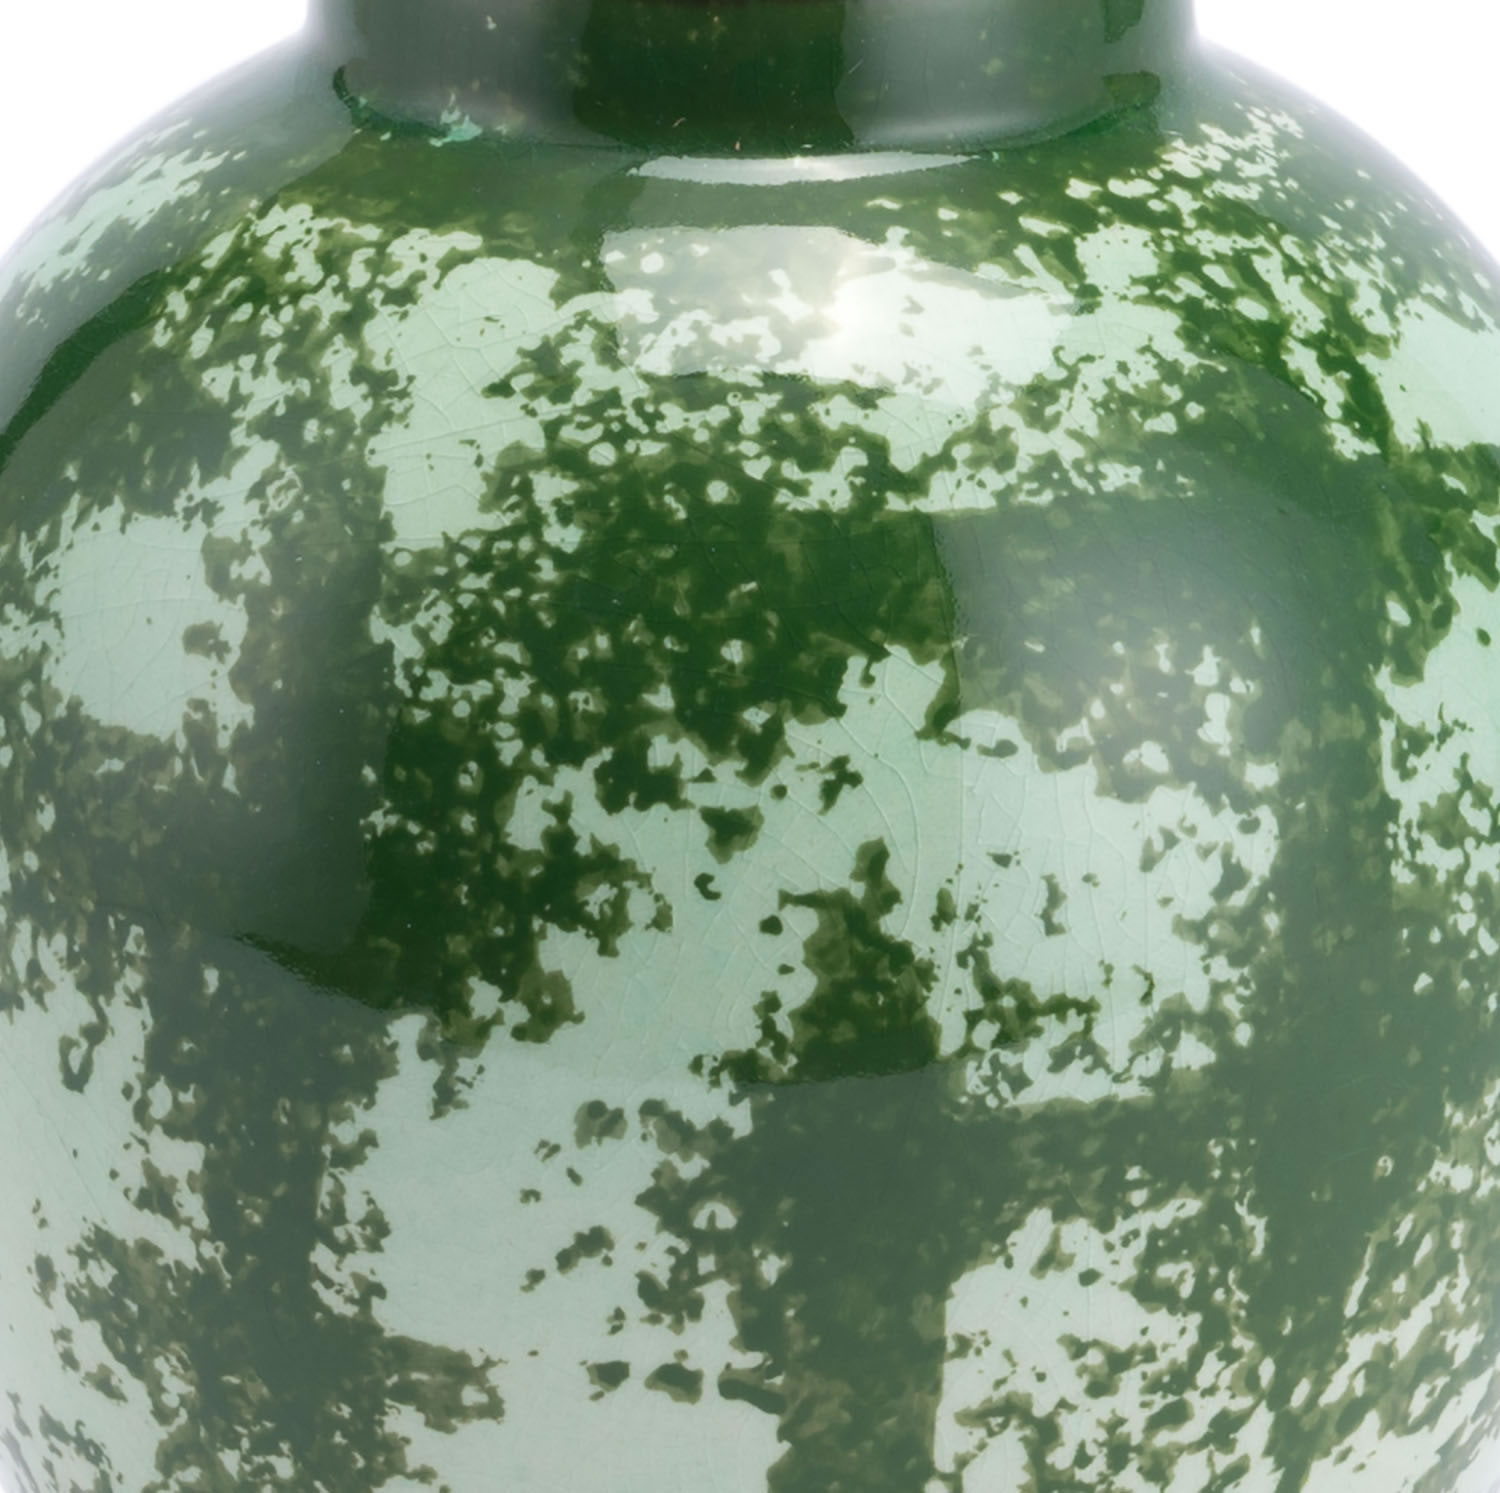 7.1" x 7.1" x 7.9" Green, Ceramic, Small Vase